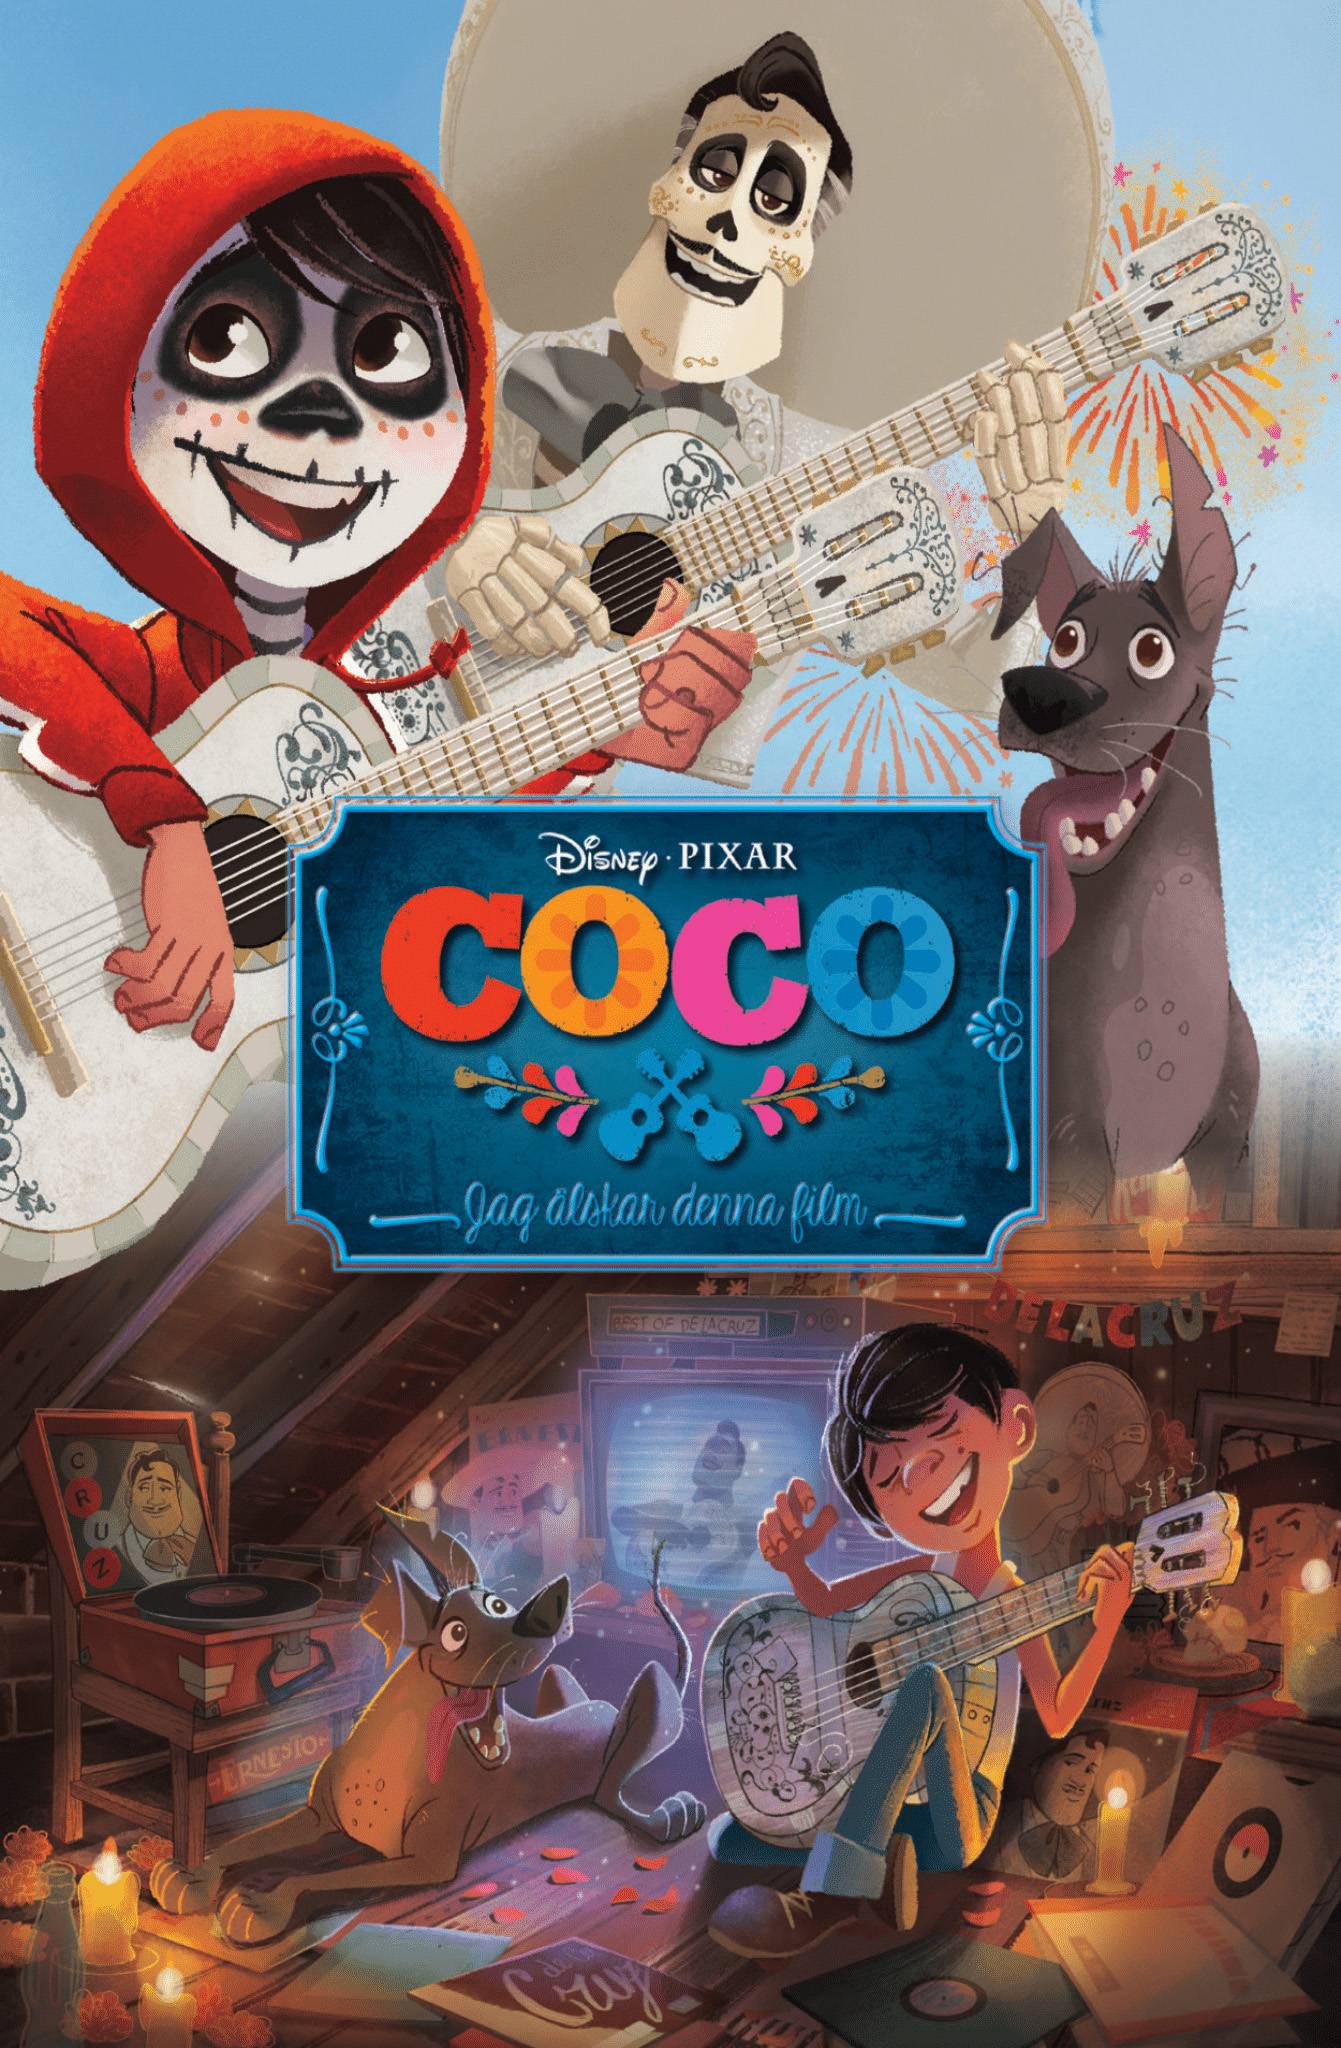 Coco filmboken